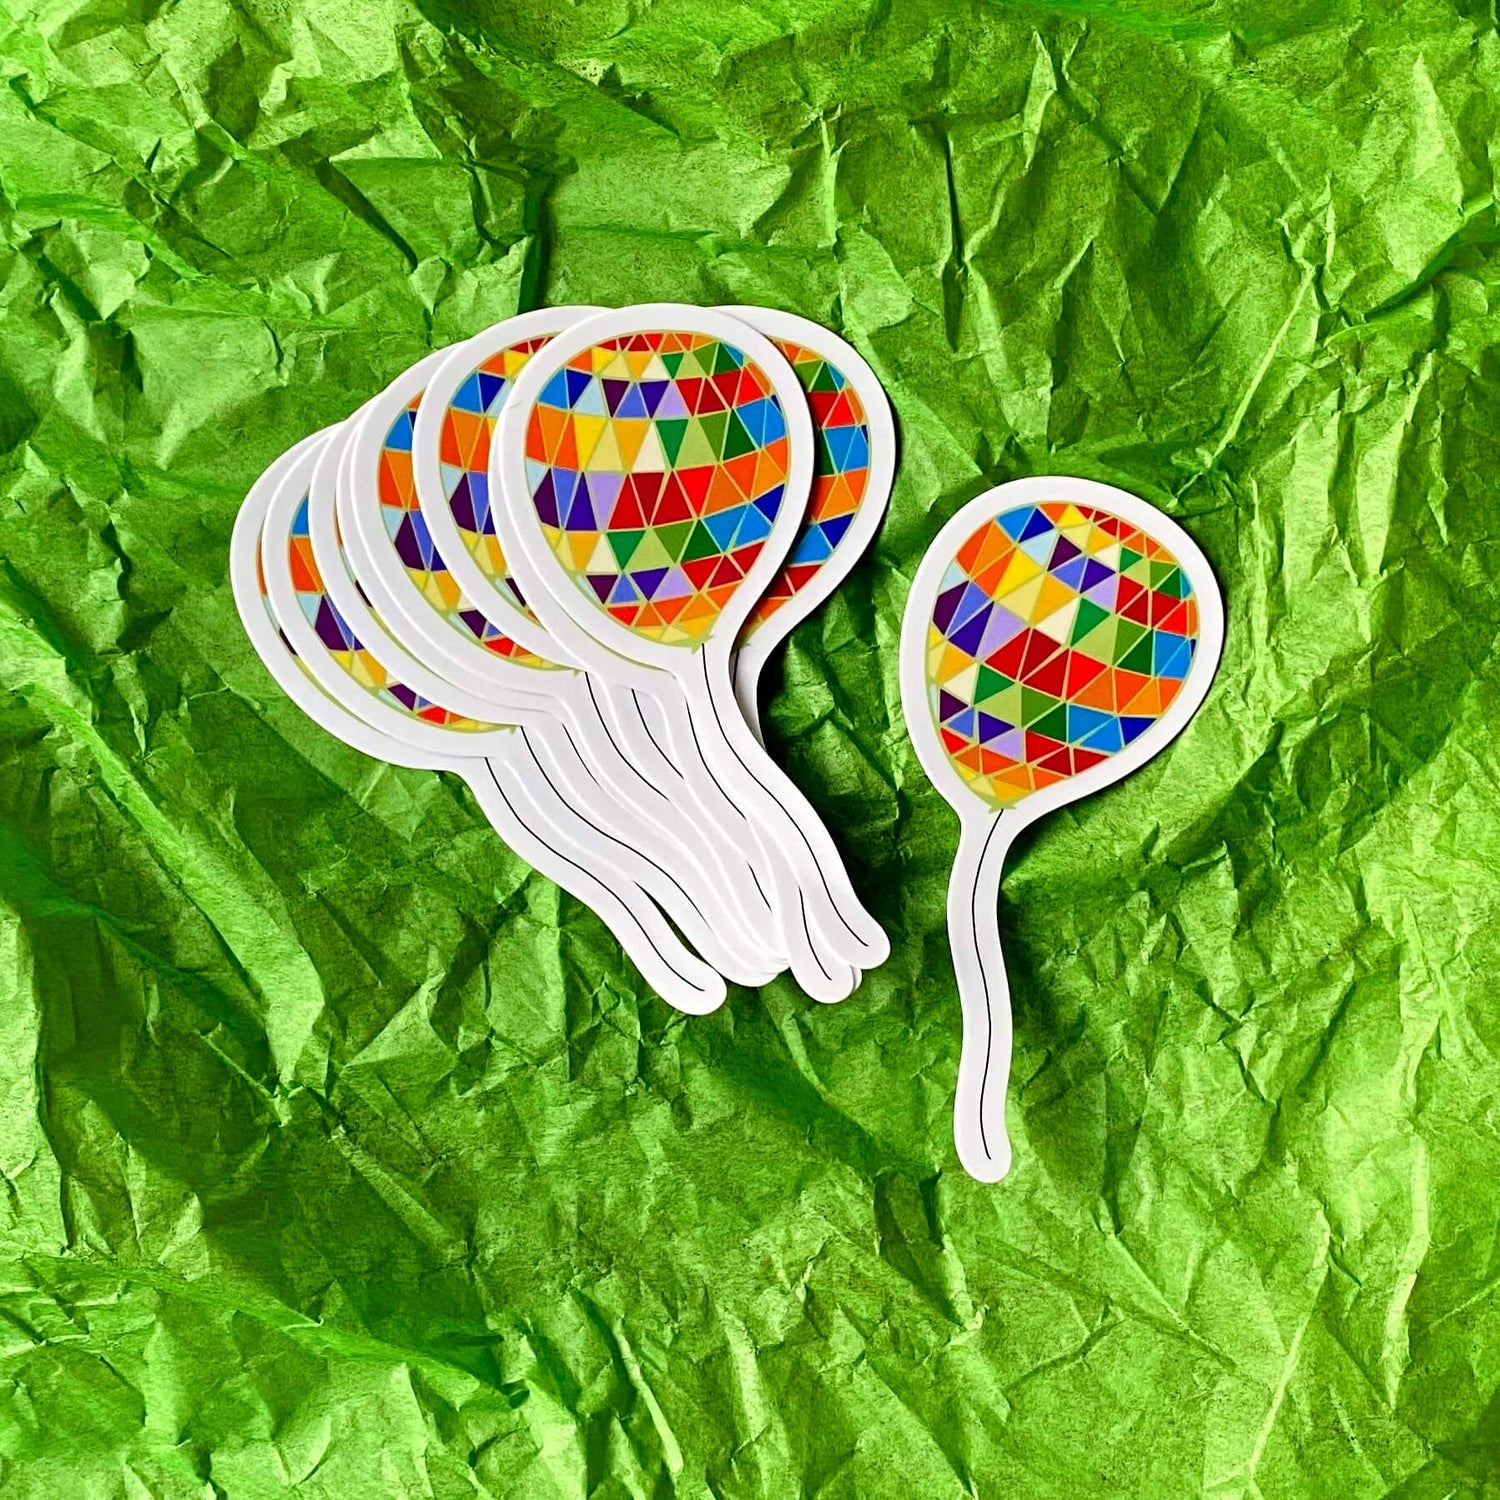 Vinyl sticker with a rainbow mosaic balloon design